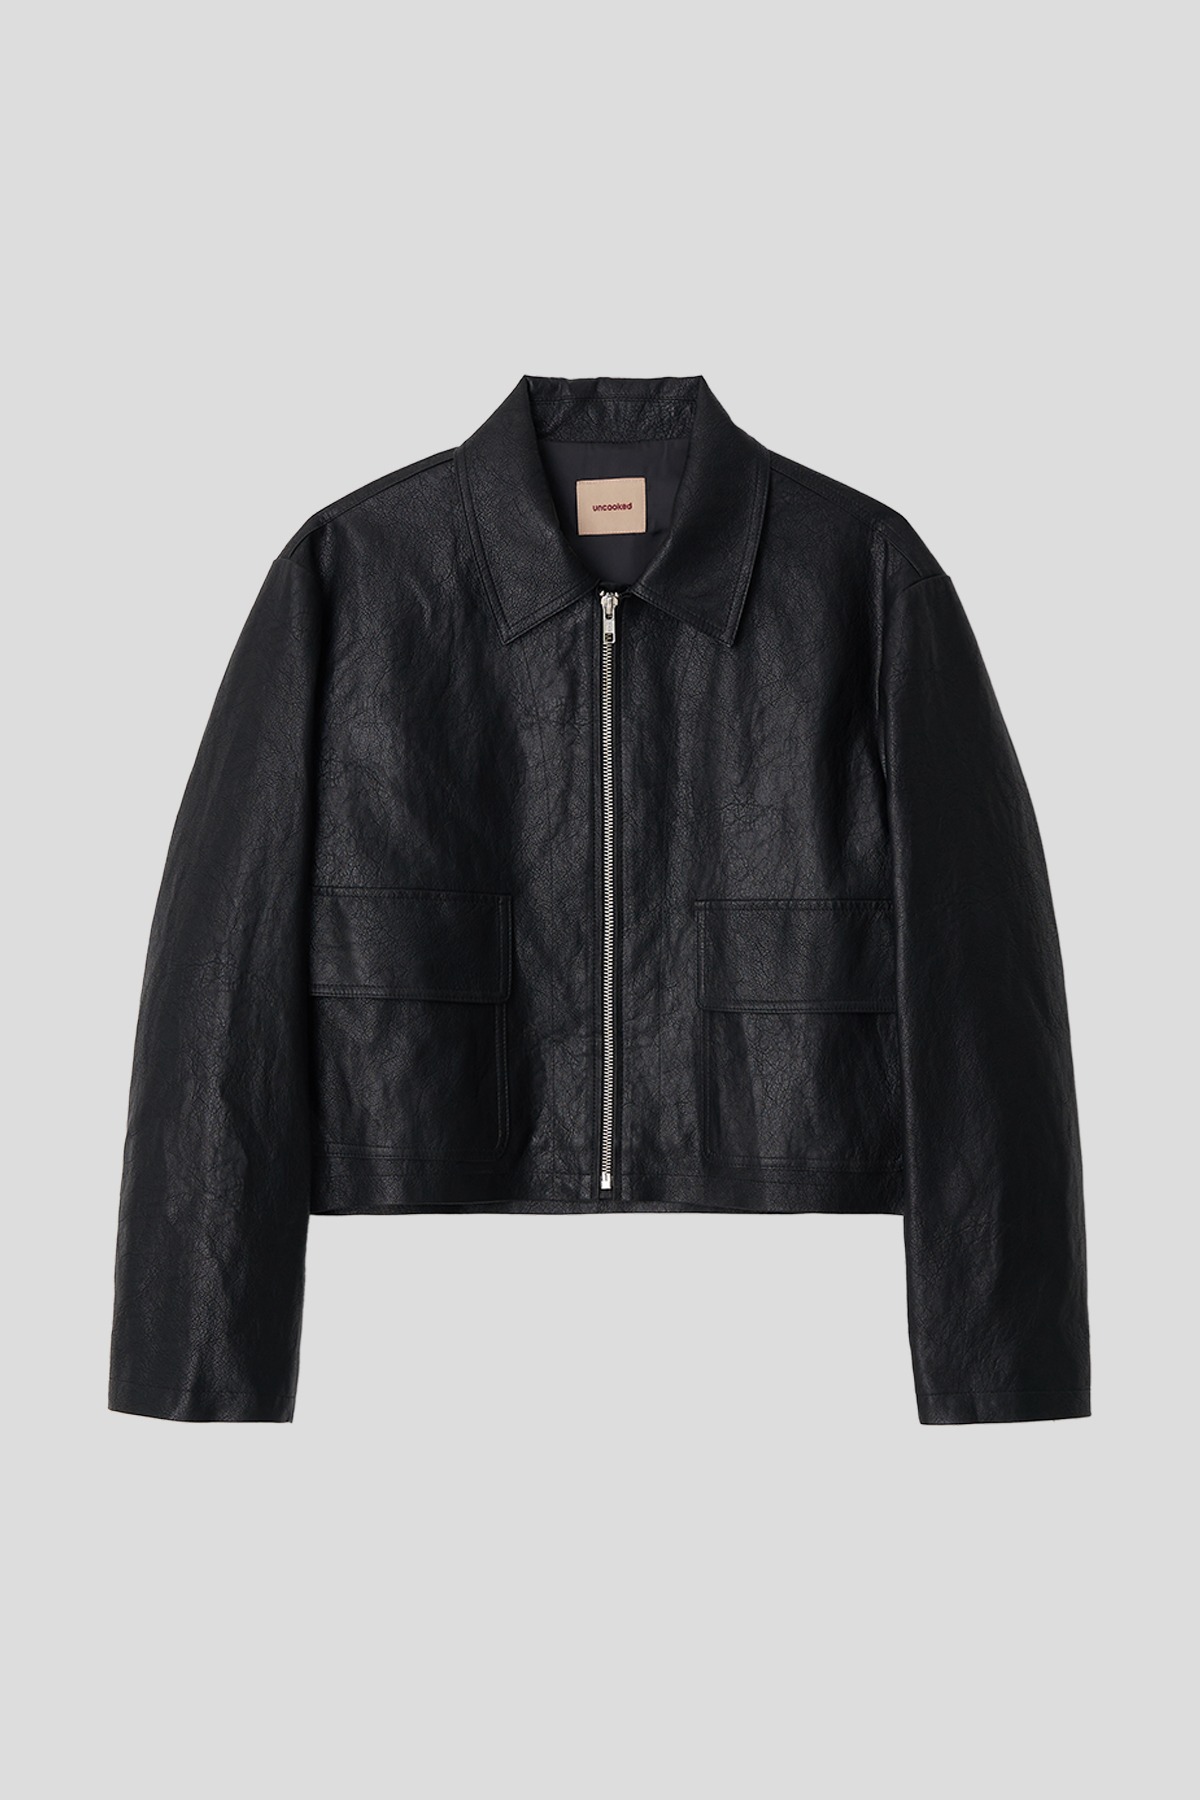 Two pocket faux leather short jacket (black)